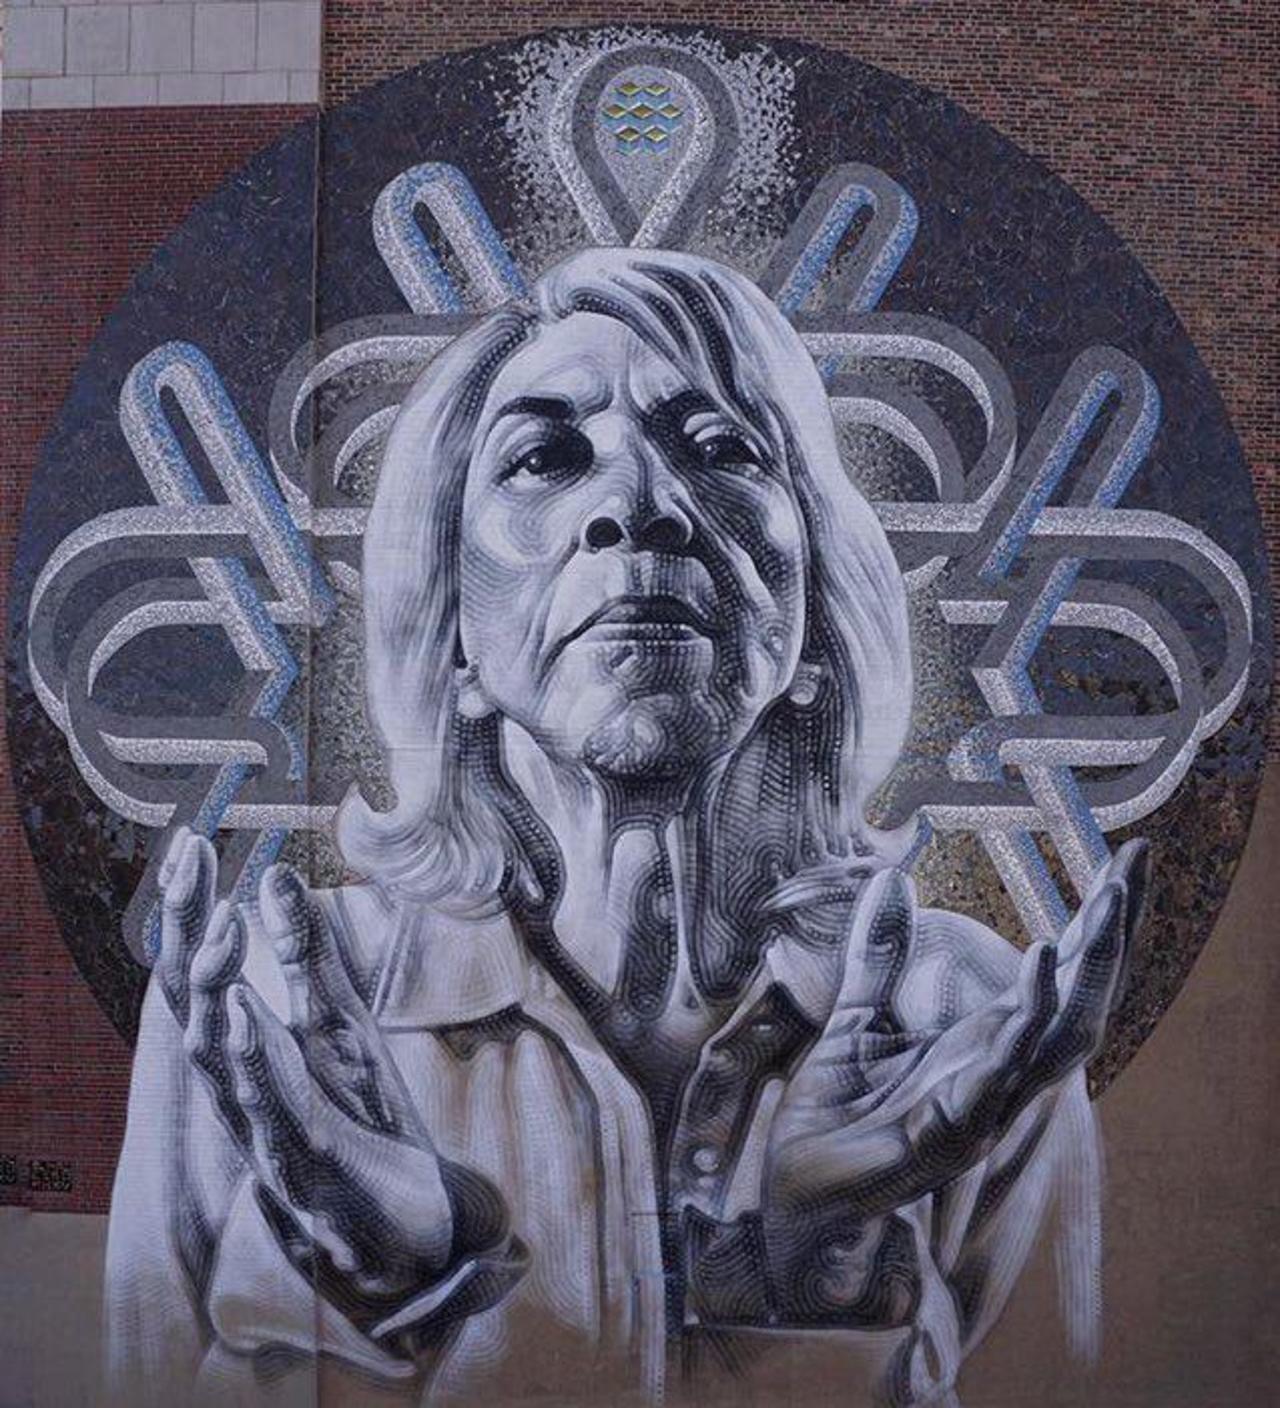 New Street Art by El Mac 

#art #graffiti #mural #streetart https://t.co/bC6r9W9jkL